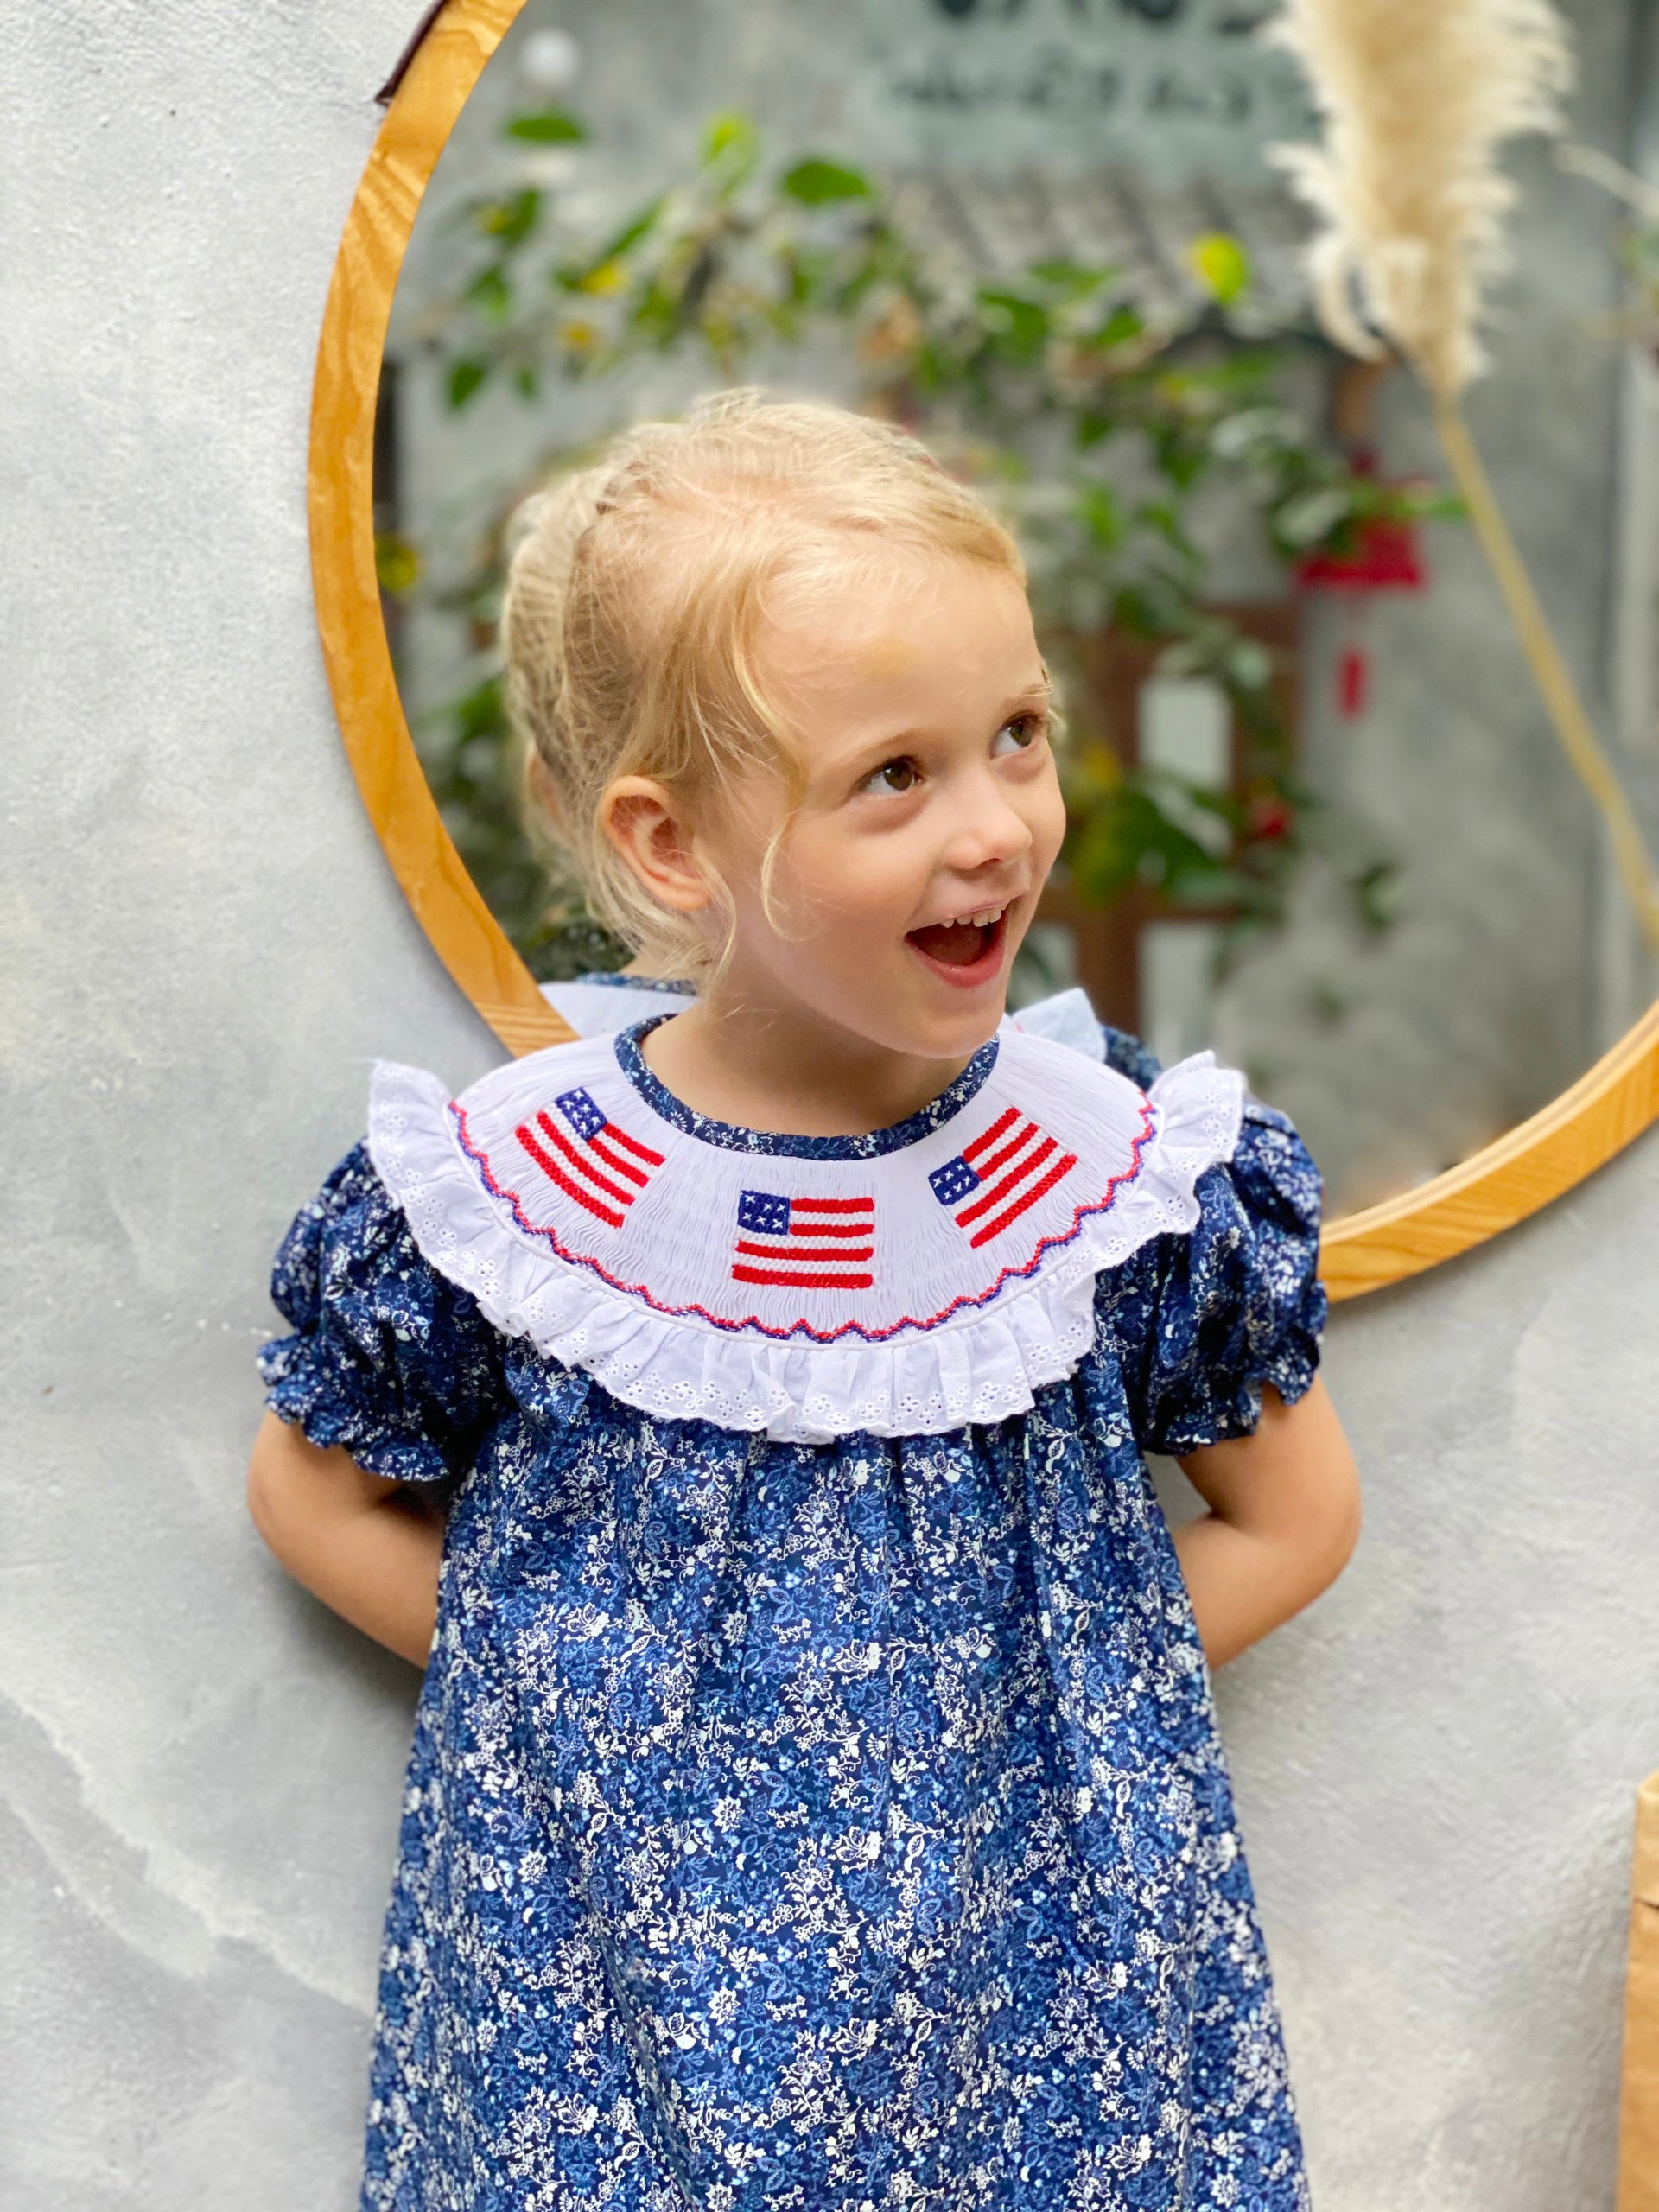 Baby Infant Girls 4th July Patriotic American Flag Red White Blue Hand Smocked Bishop Dress Navy Floral - Angeline Kids